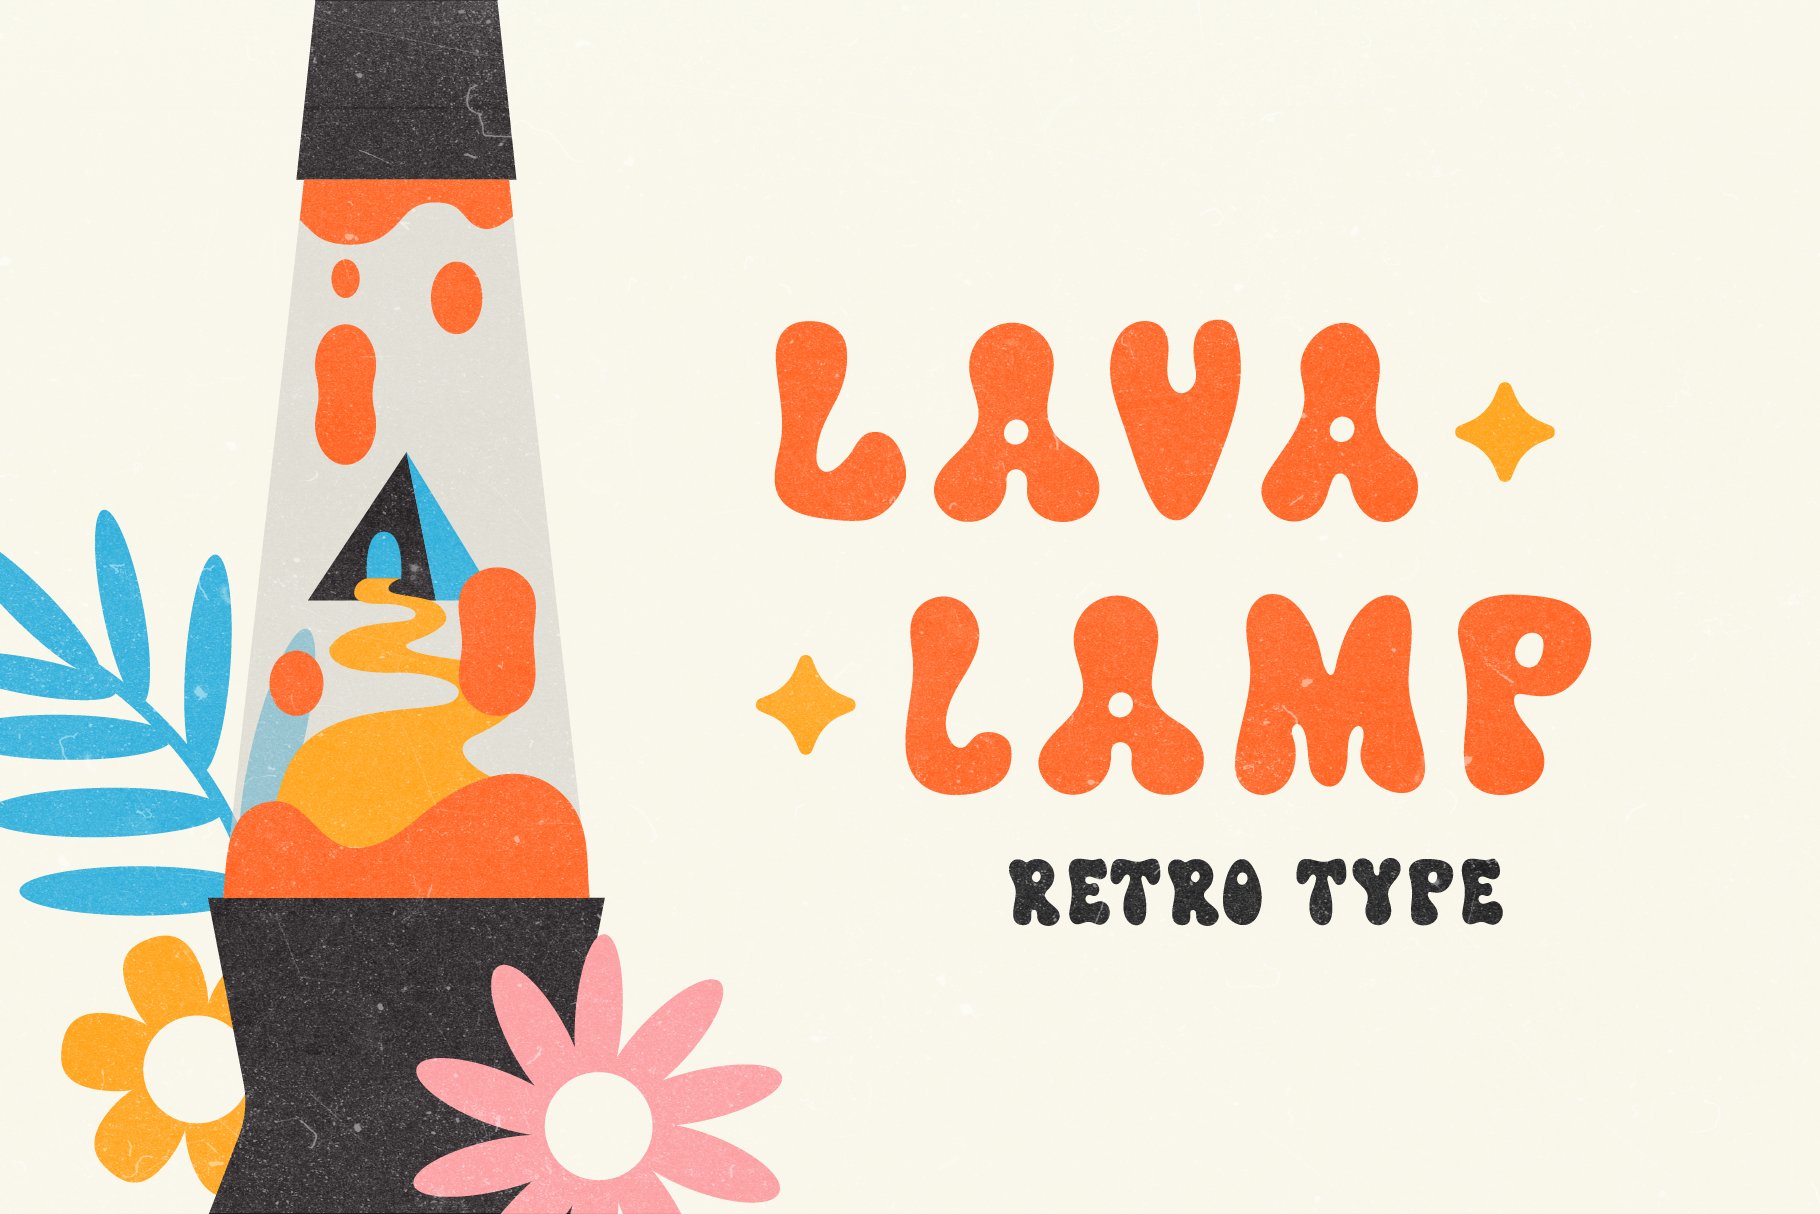 Lava Lamp Display - Retro Font cover image.